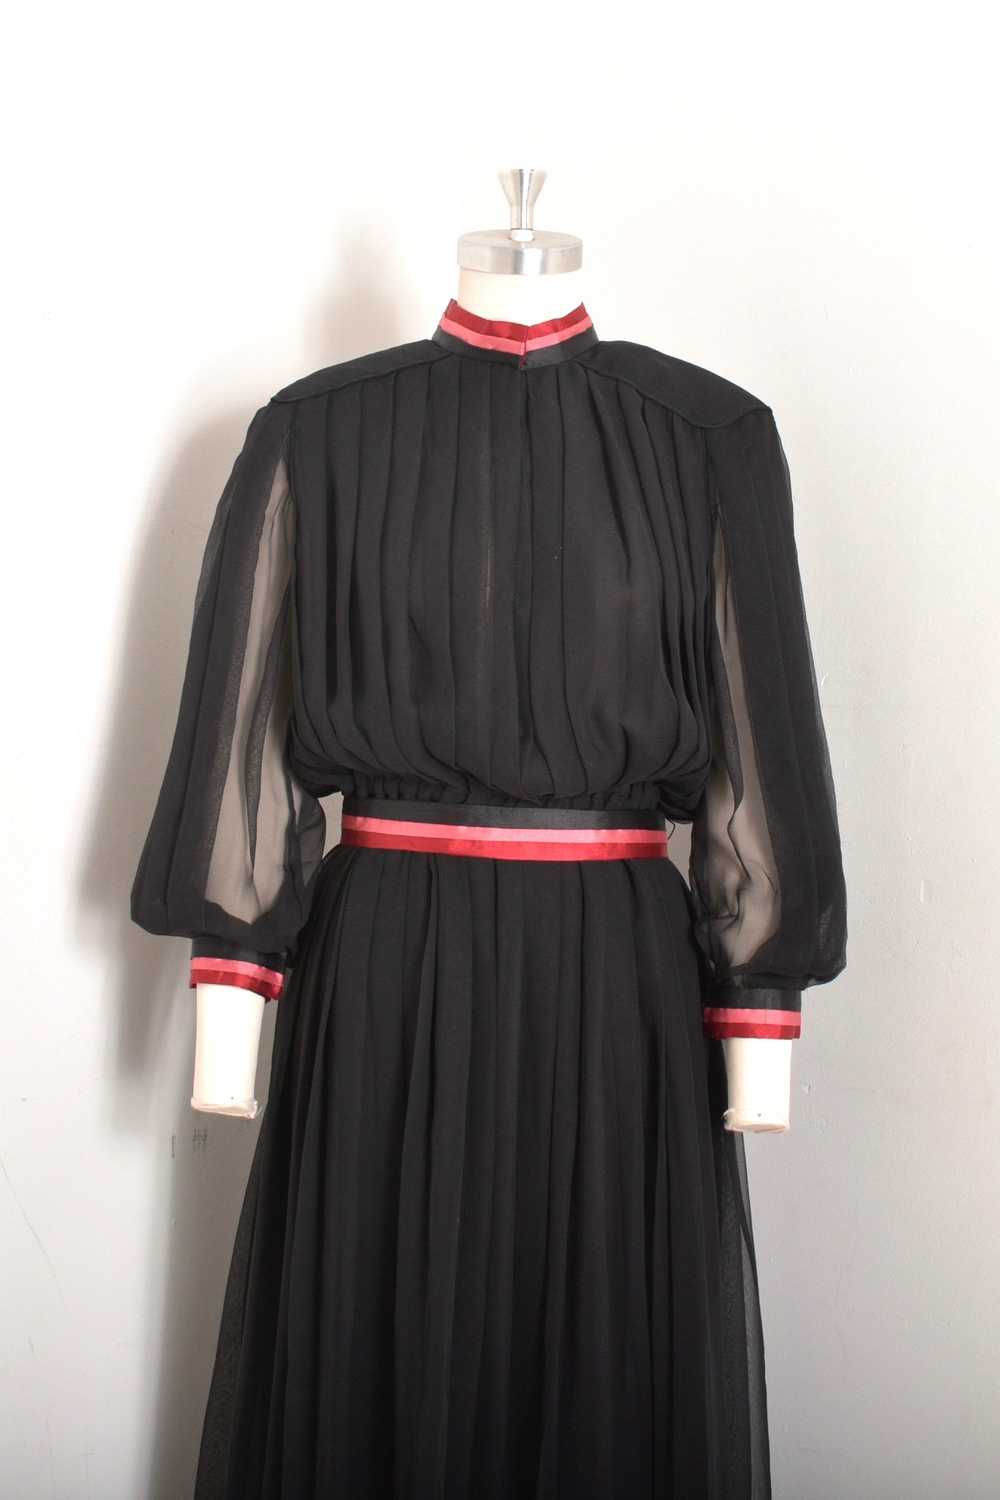 1980s Pleated Chiffon Ribbon Dress-medium - image 2